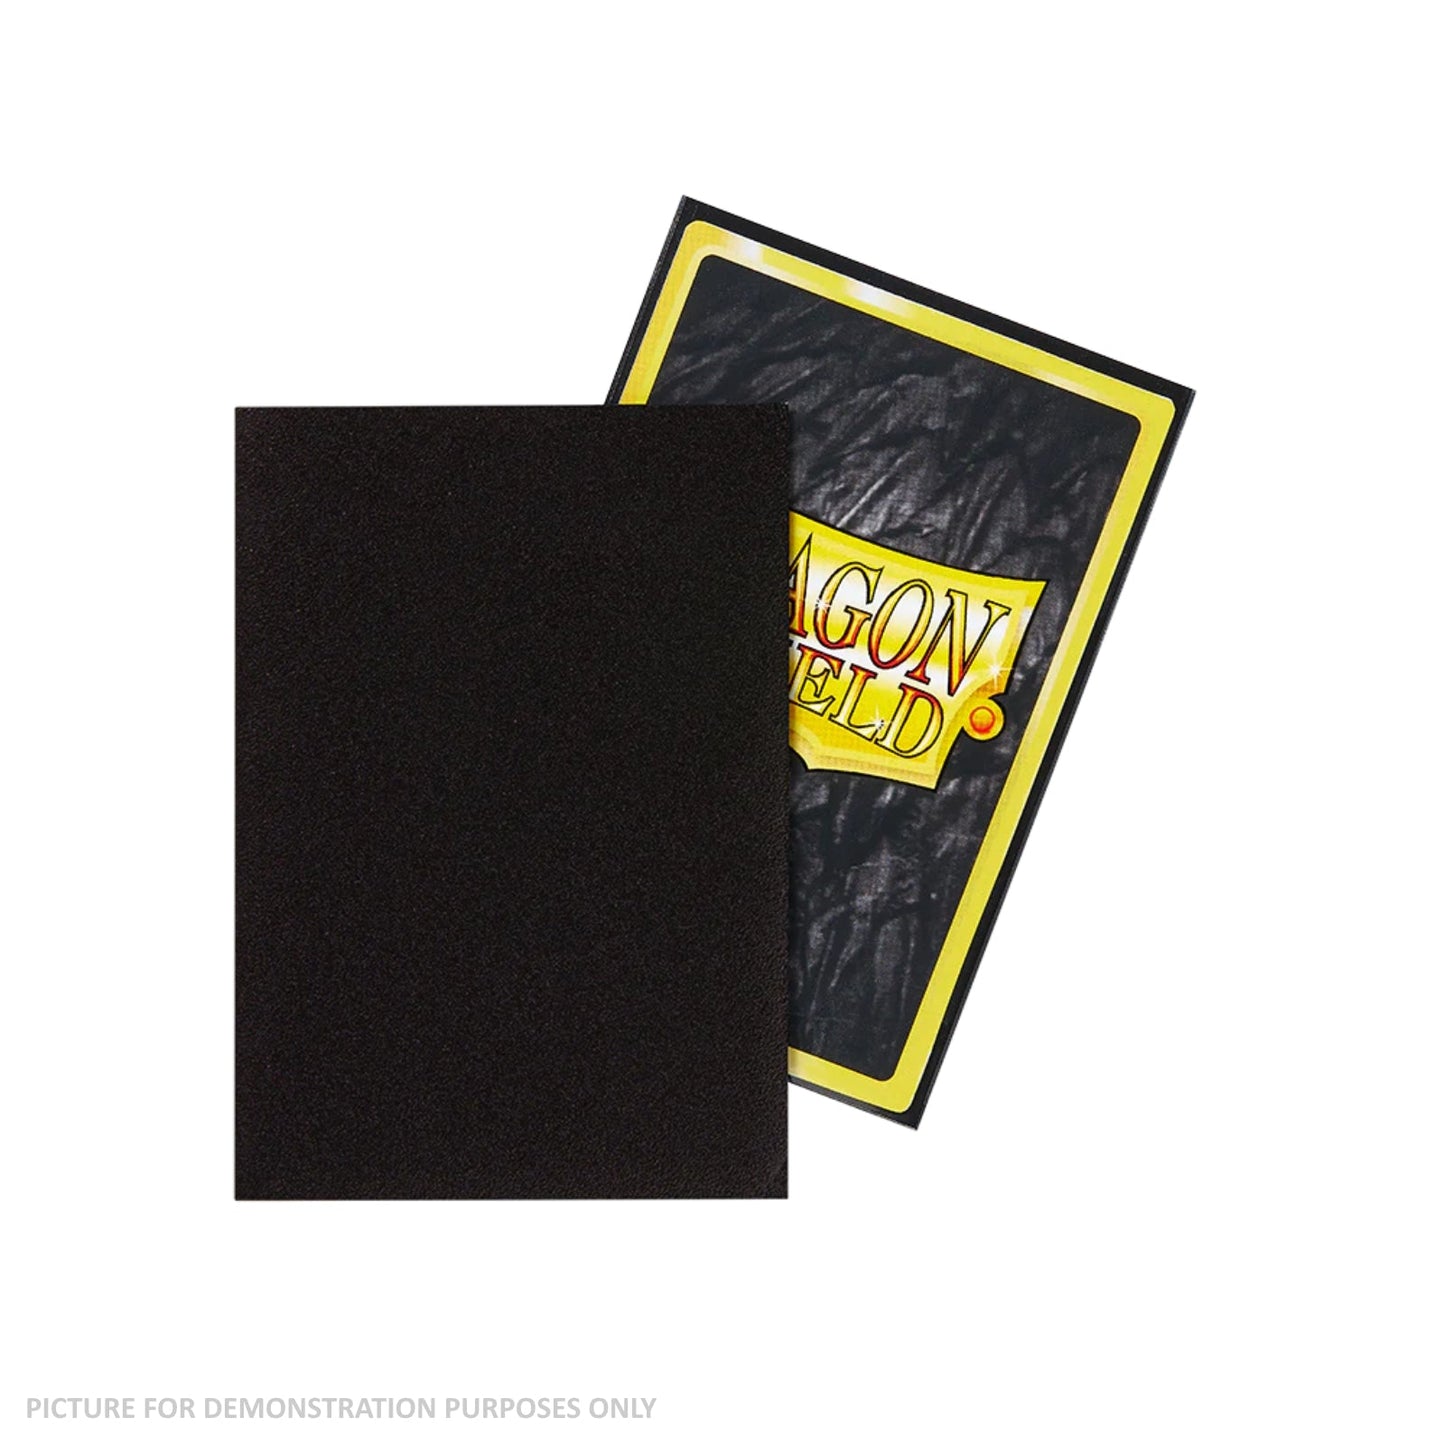 Dragon Shield 60 Japanese Size Card Sleeves - Matte Black